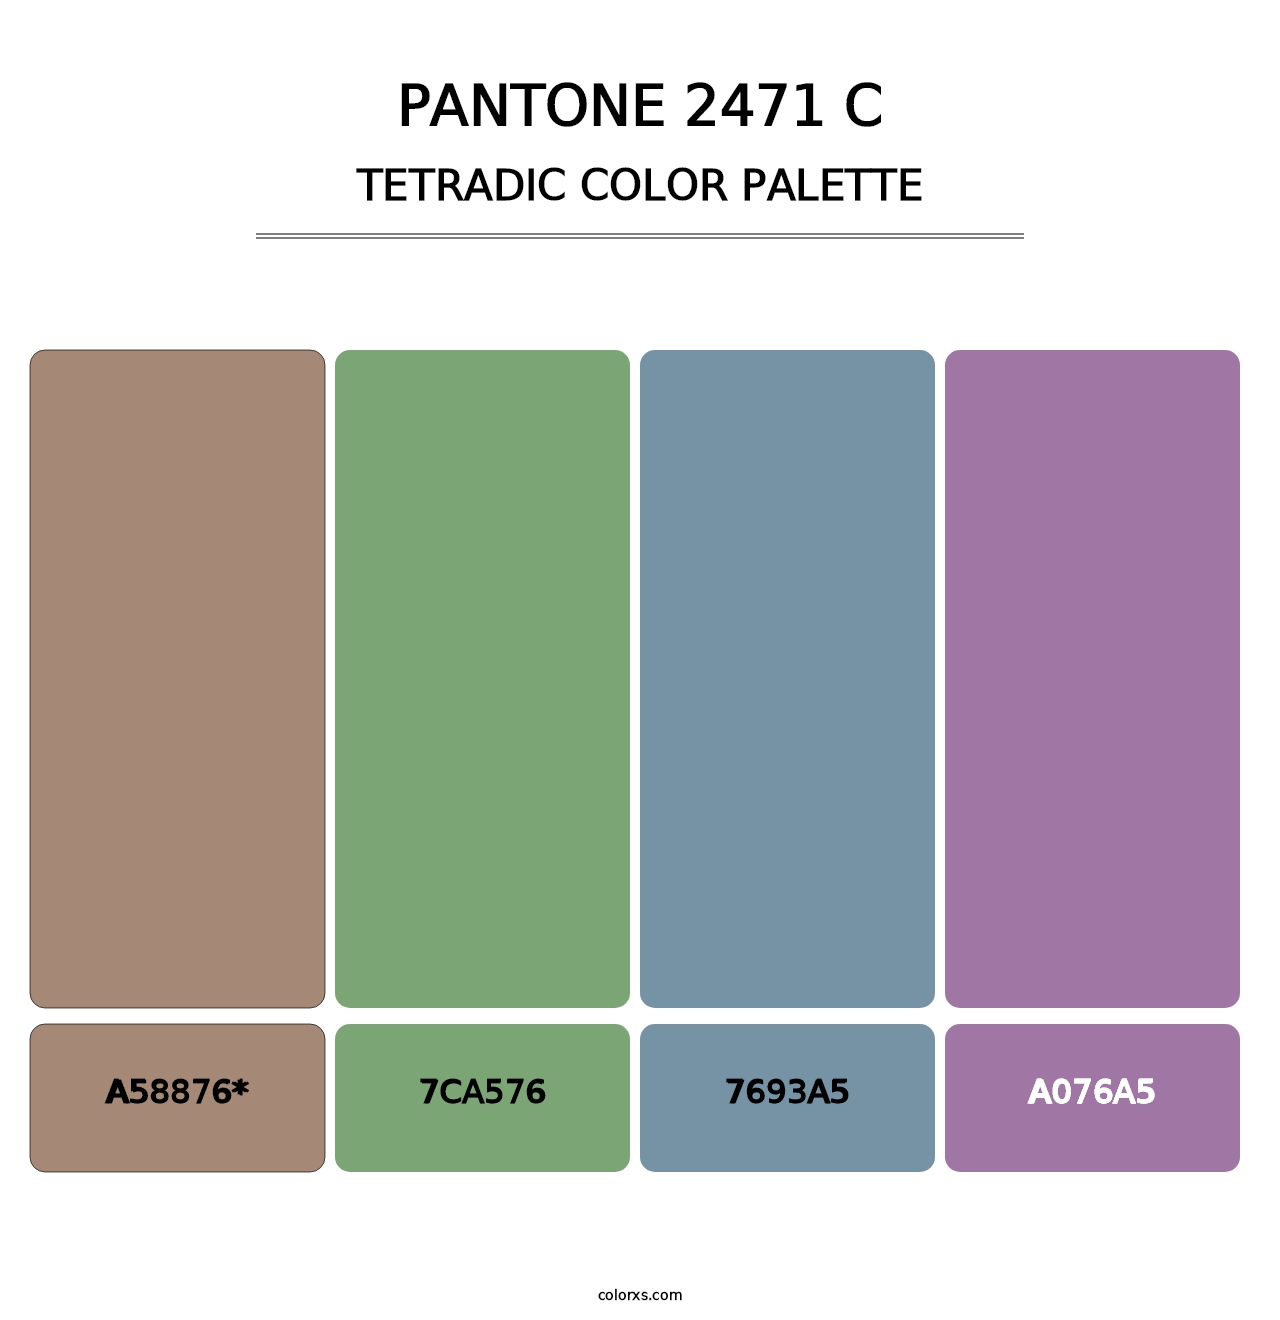 PANTONE 2471 C - Tetradic Color Palette